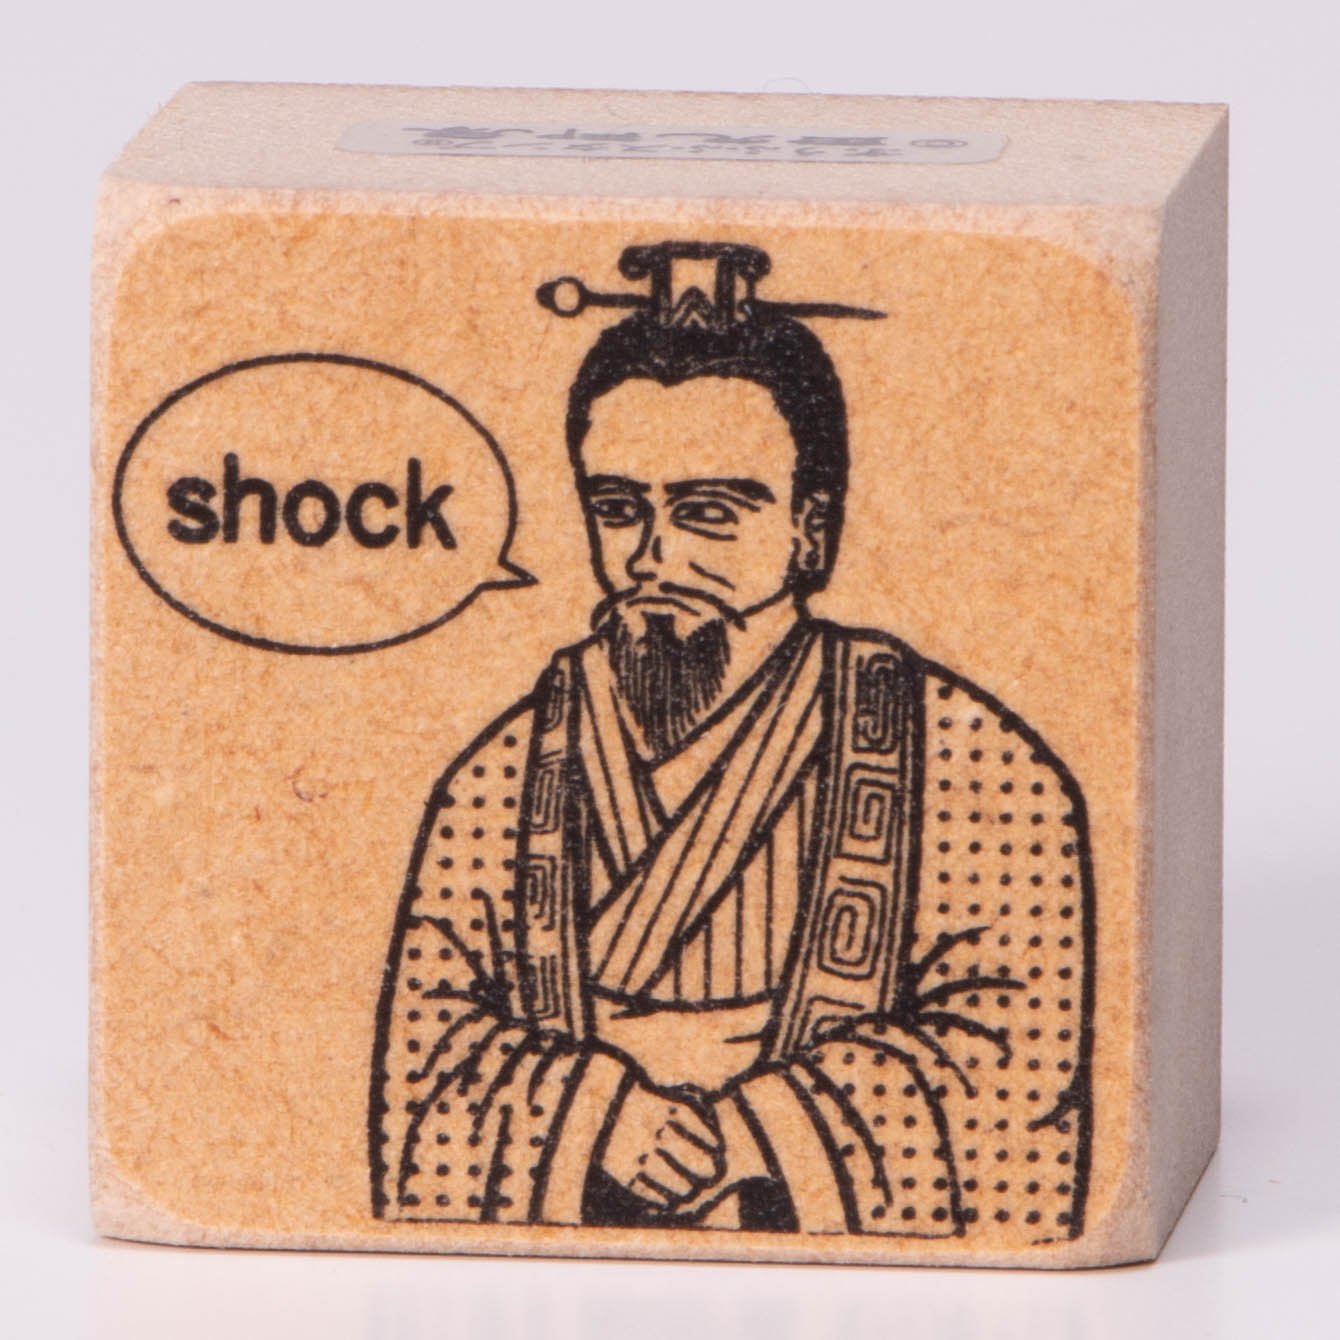 shock(蜀)